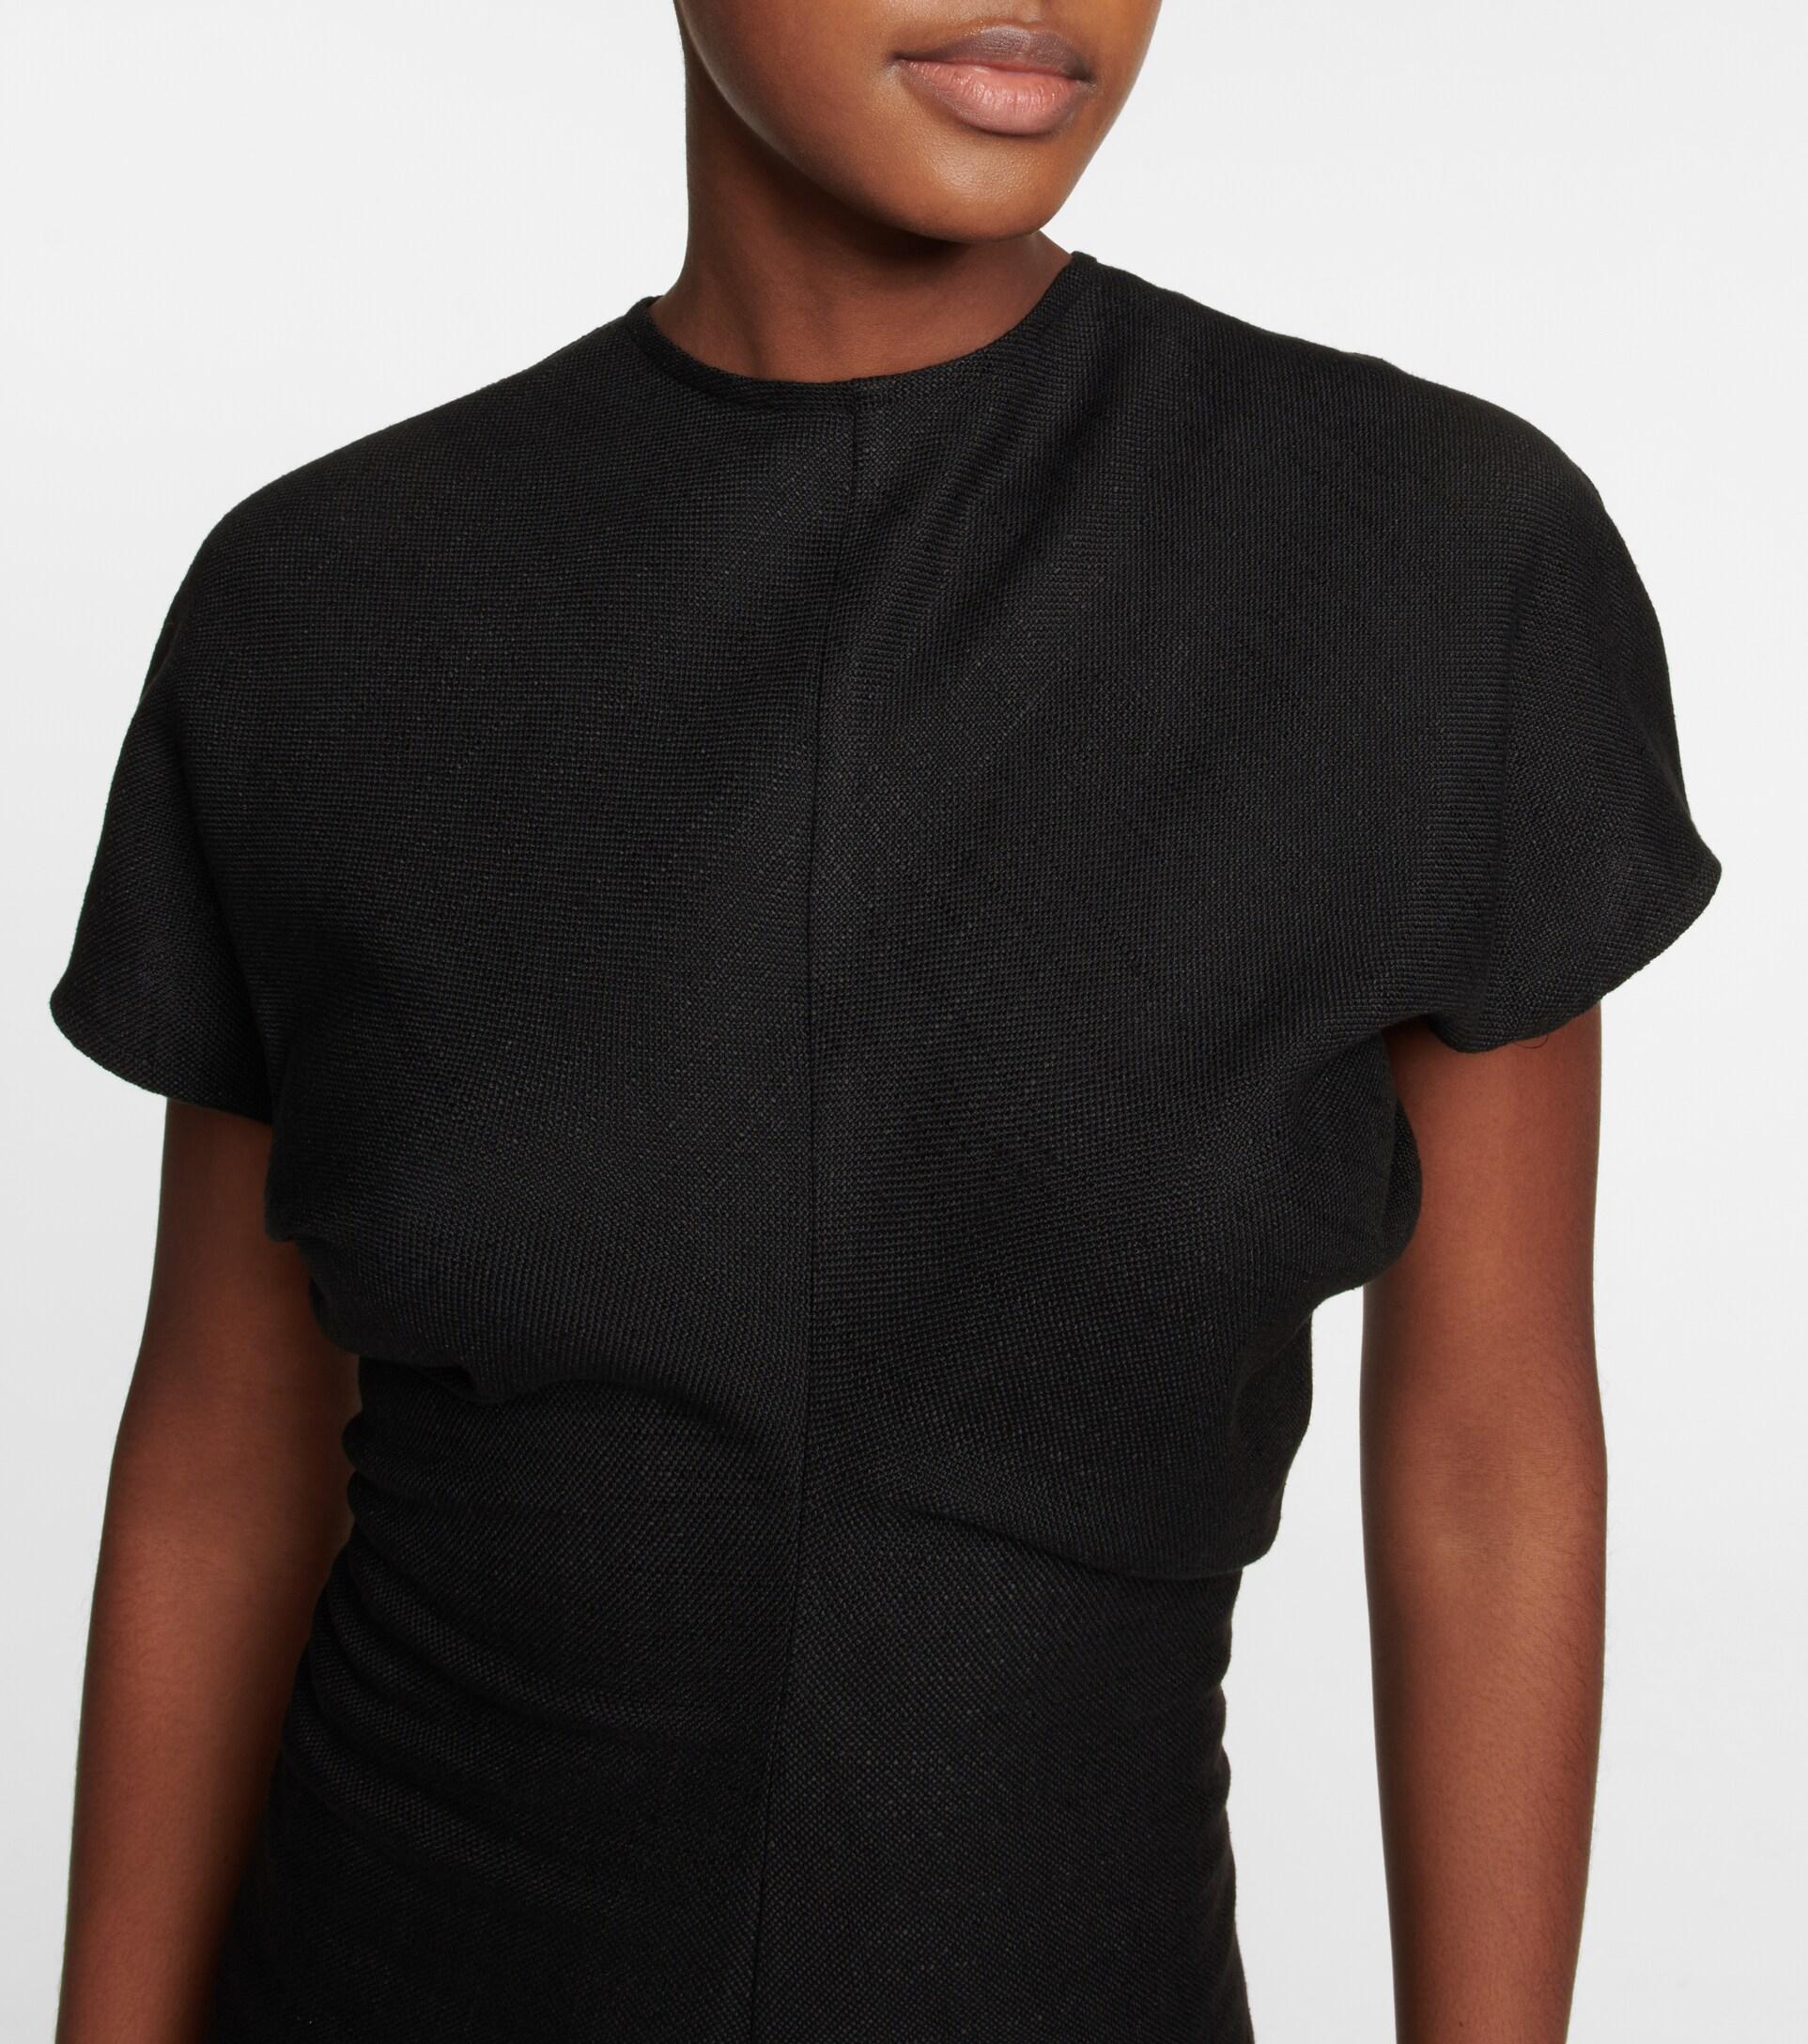 Totême Gathered Linen-blend Maxi Dress in Black | Lyst